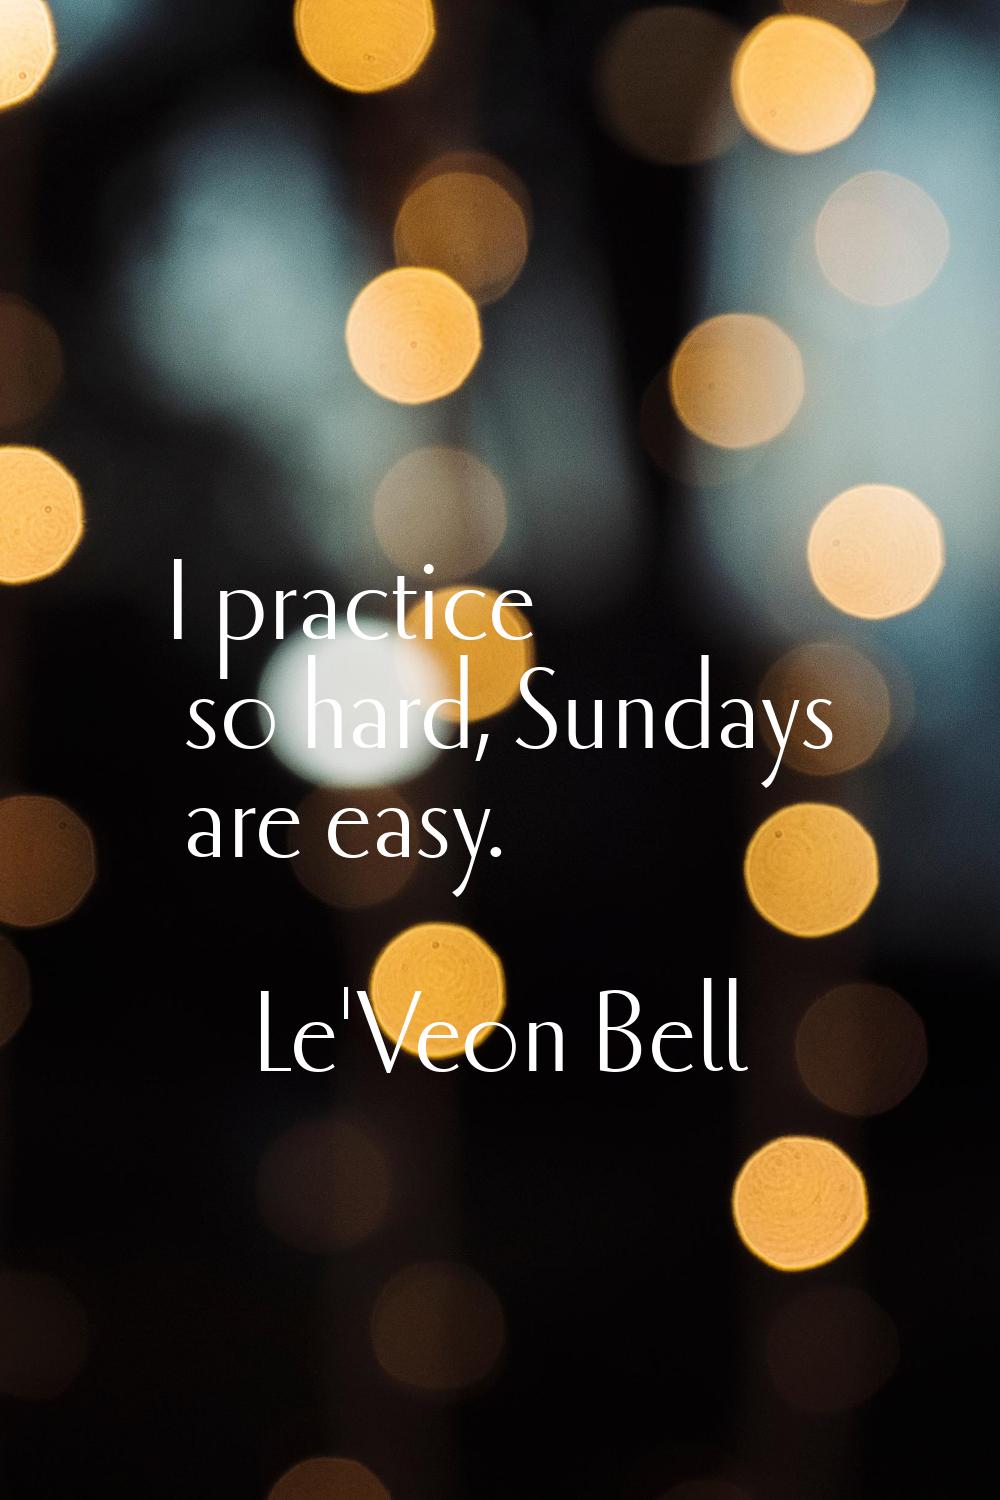 I practice so hard, Sundays are easy.